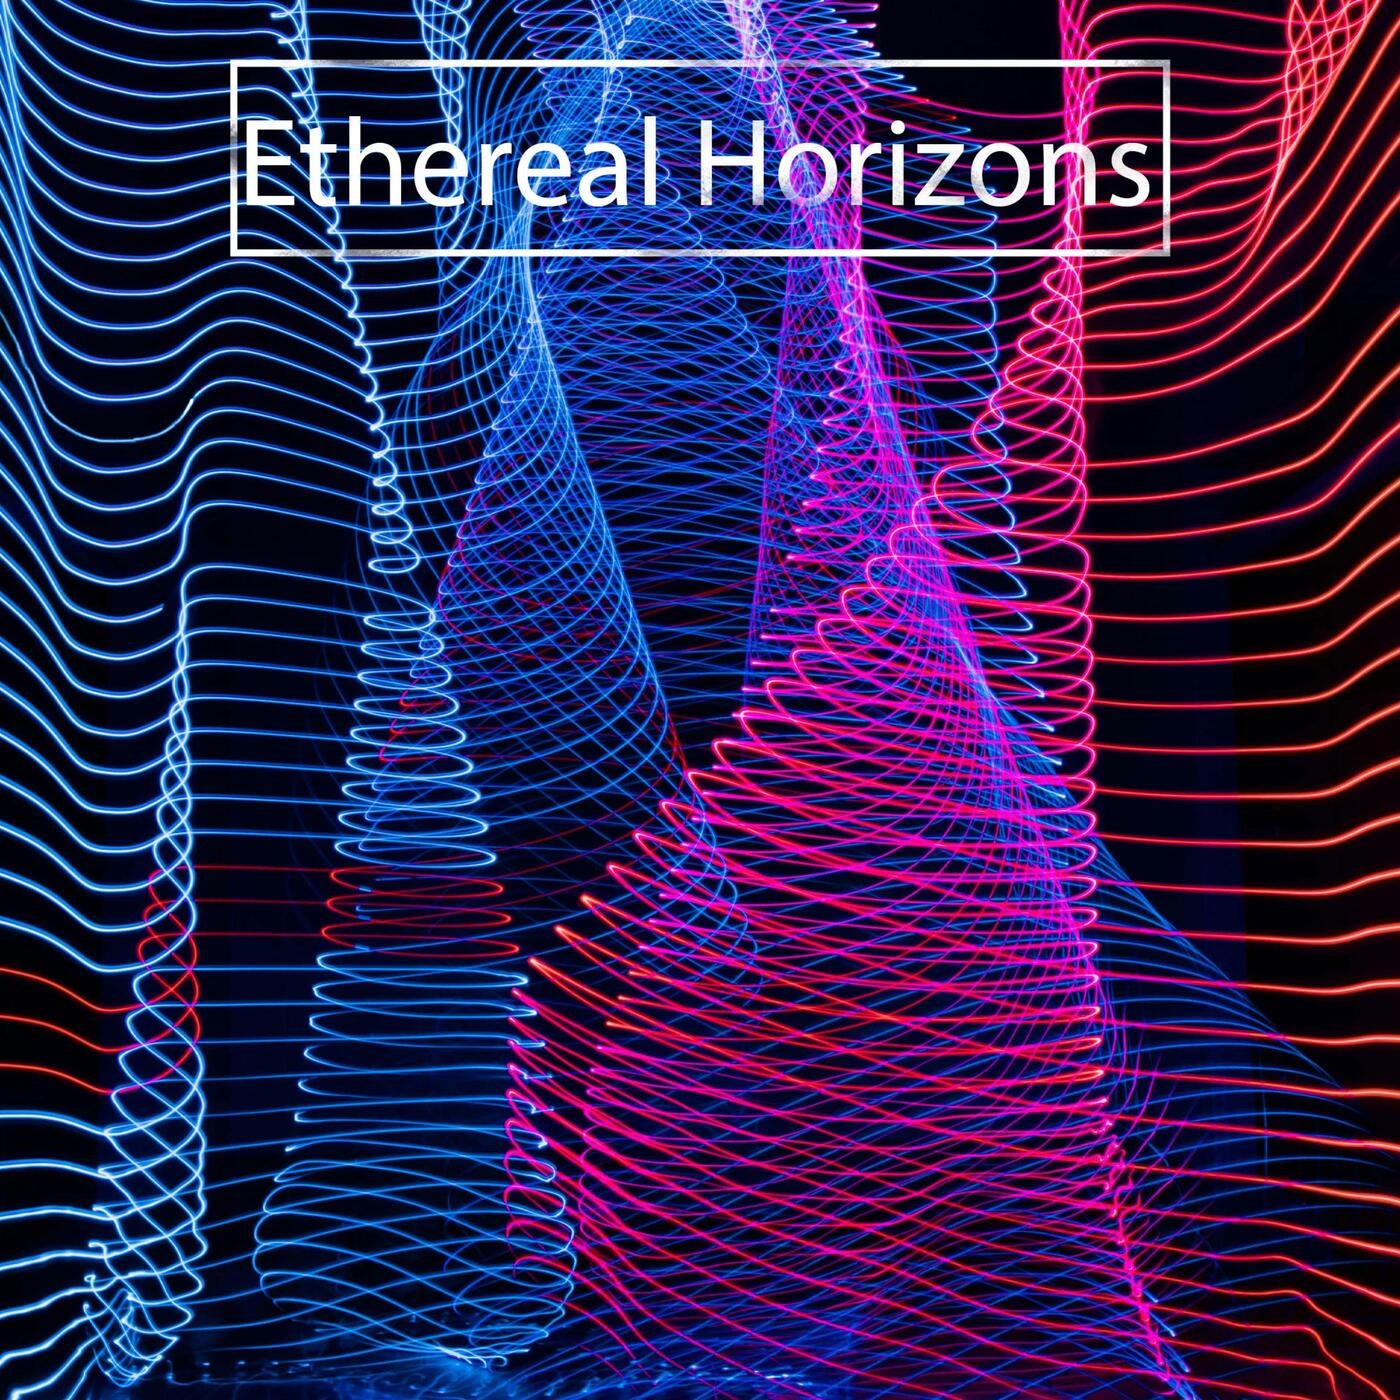 Ethereal Horizons